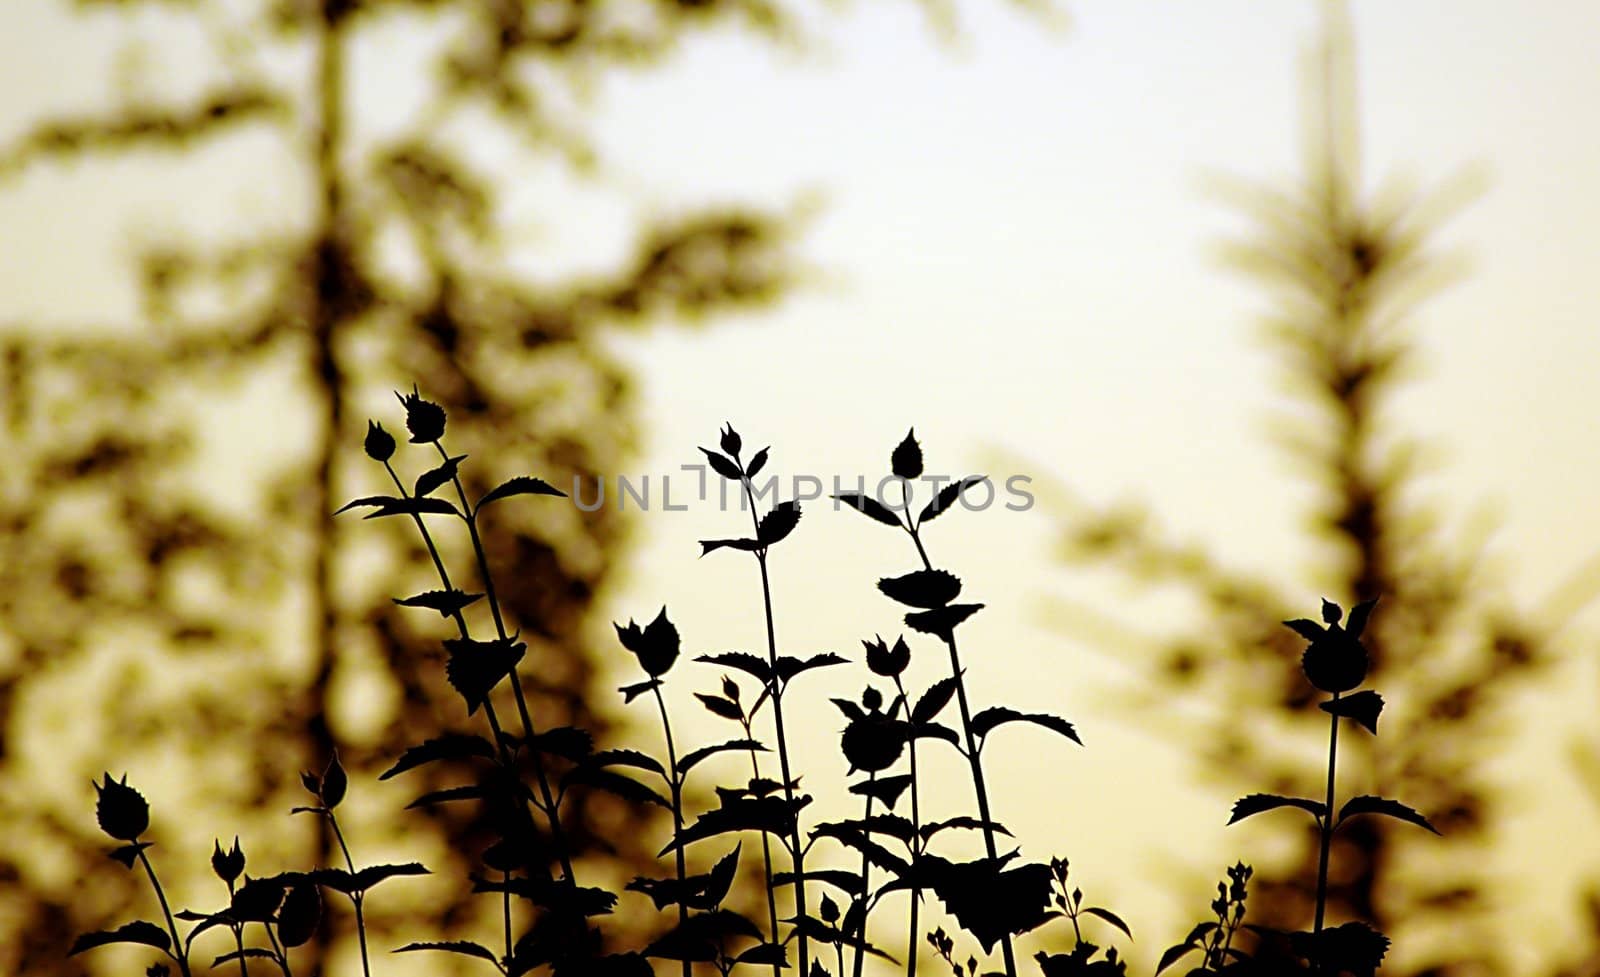 Evening black flower silhouettes #2 by sundaune